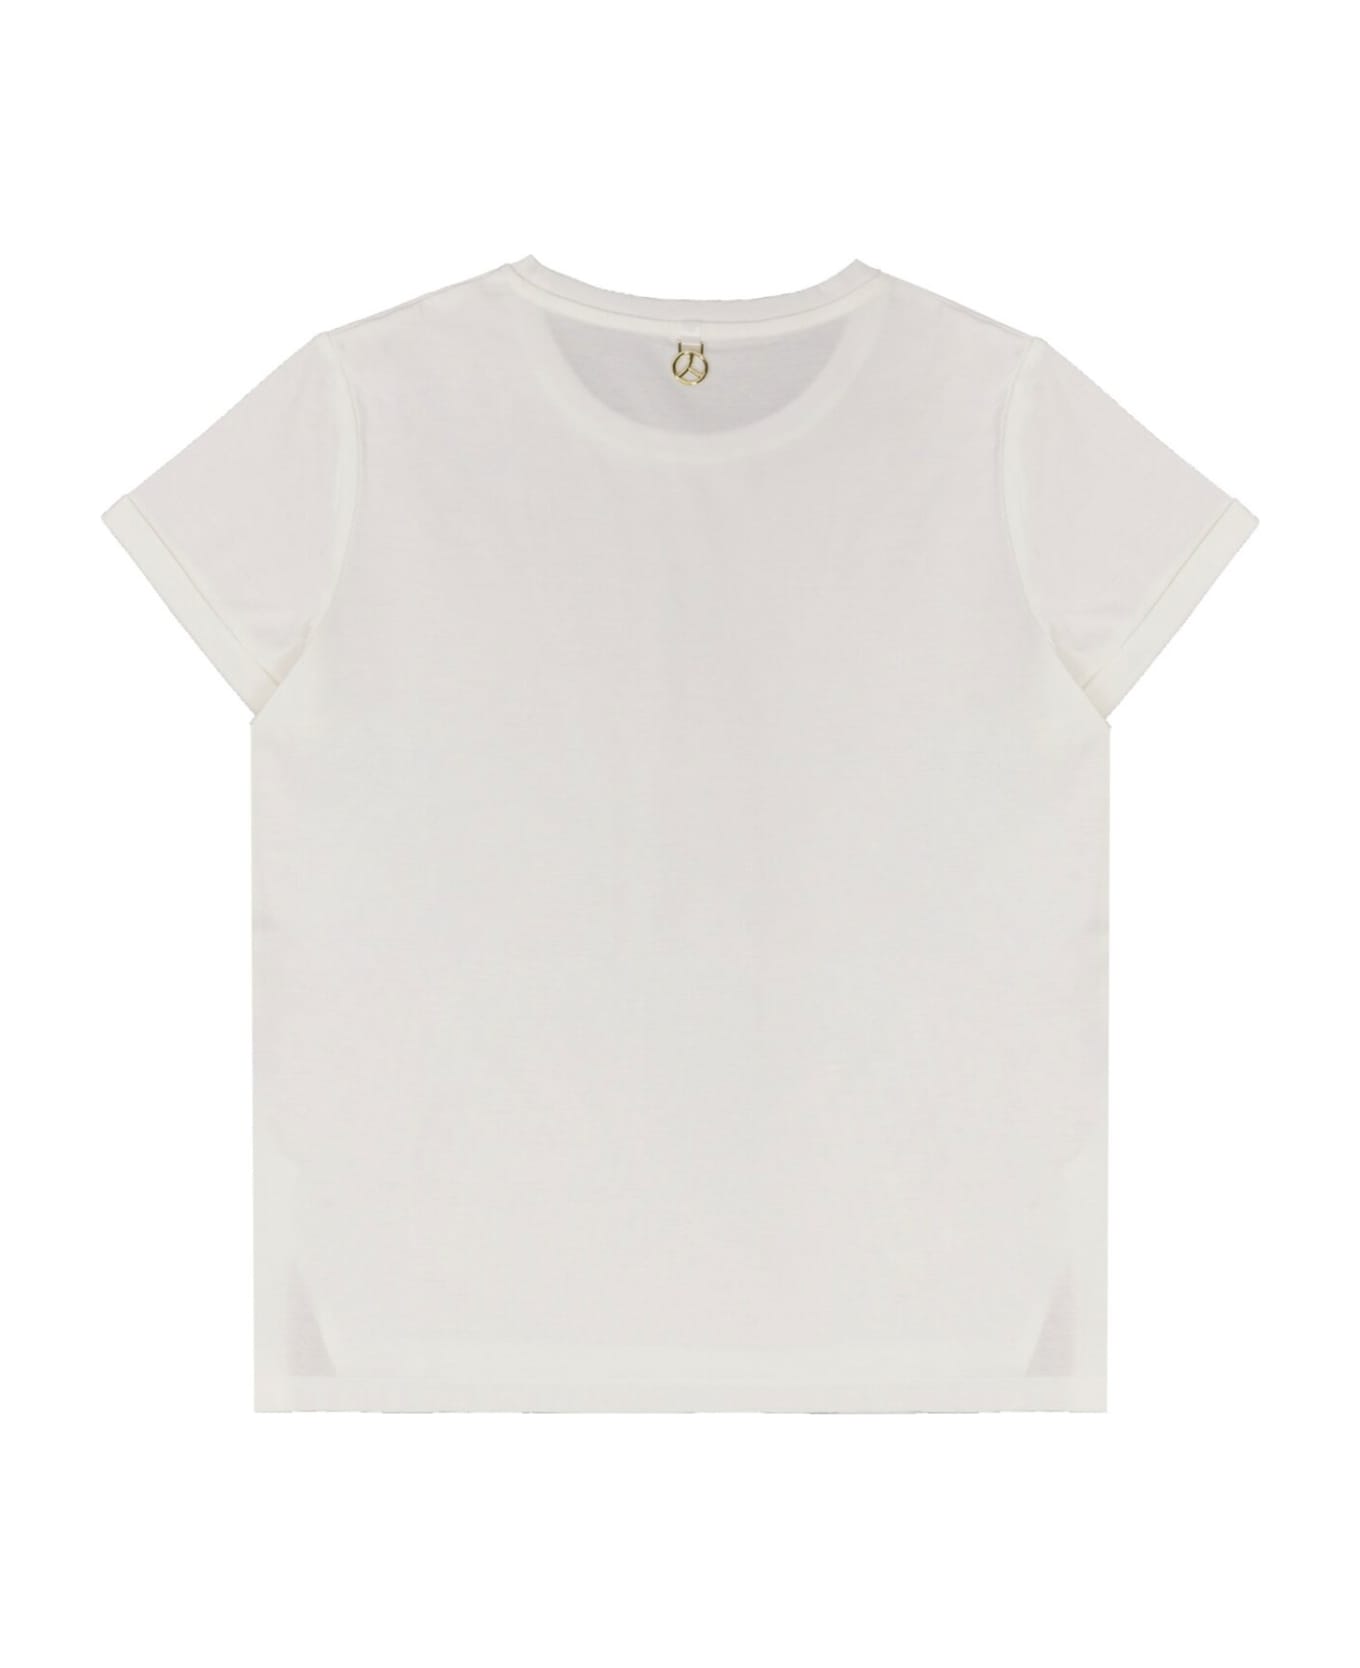 People Of Shibuya White Crew-neck T-shirt - BIANCO Tシャツ